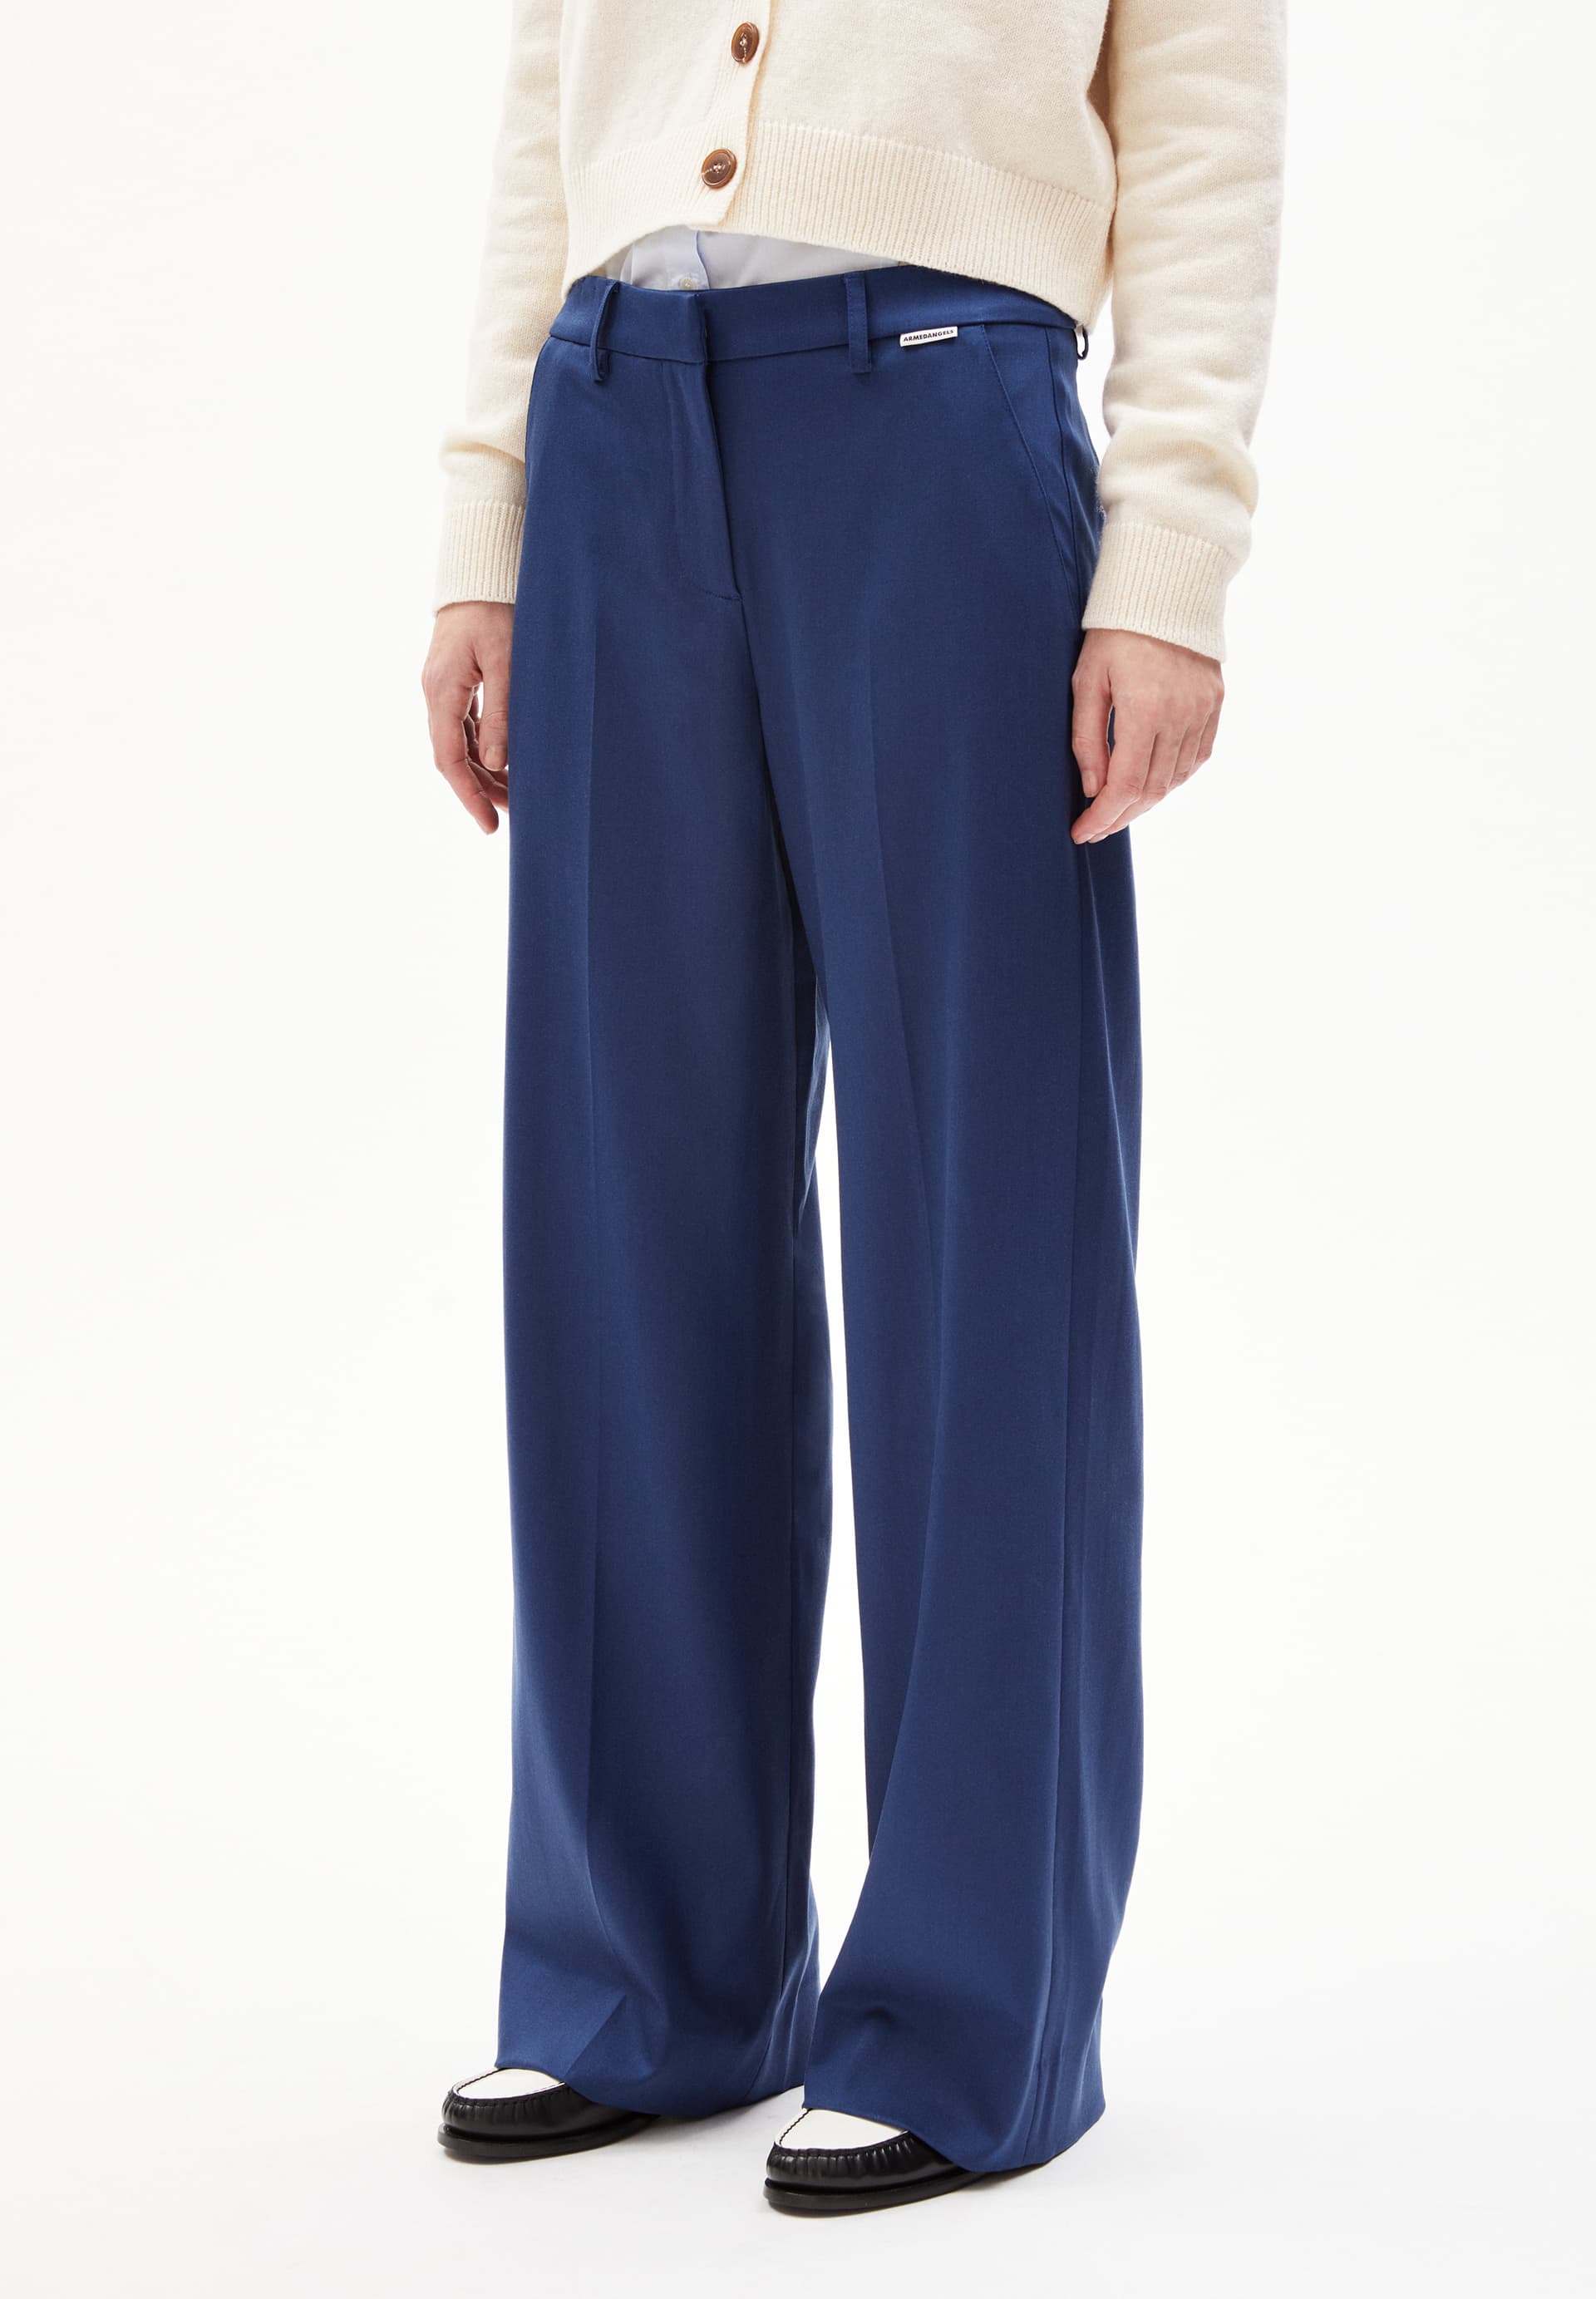 LEANDRAA Woven Pants made of TENCEL™ Lyocell Mix